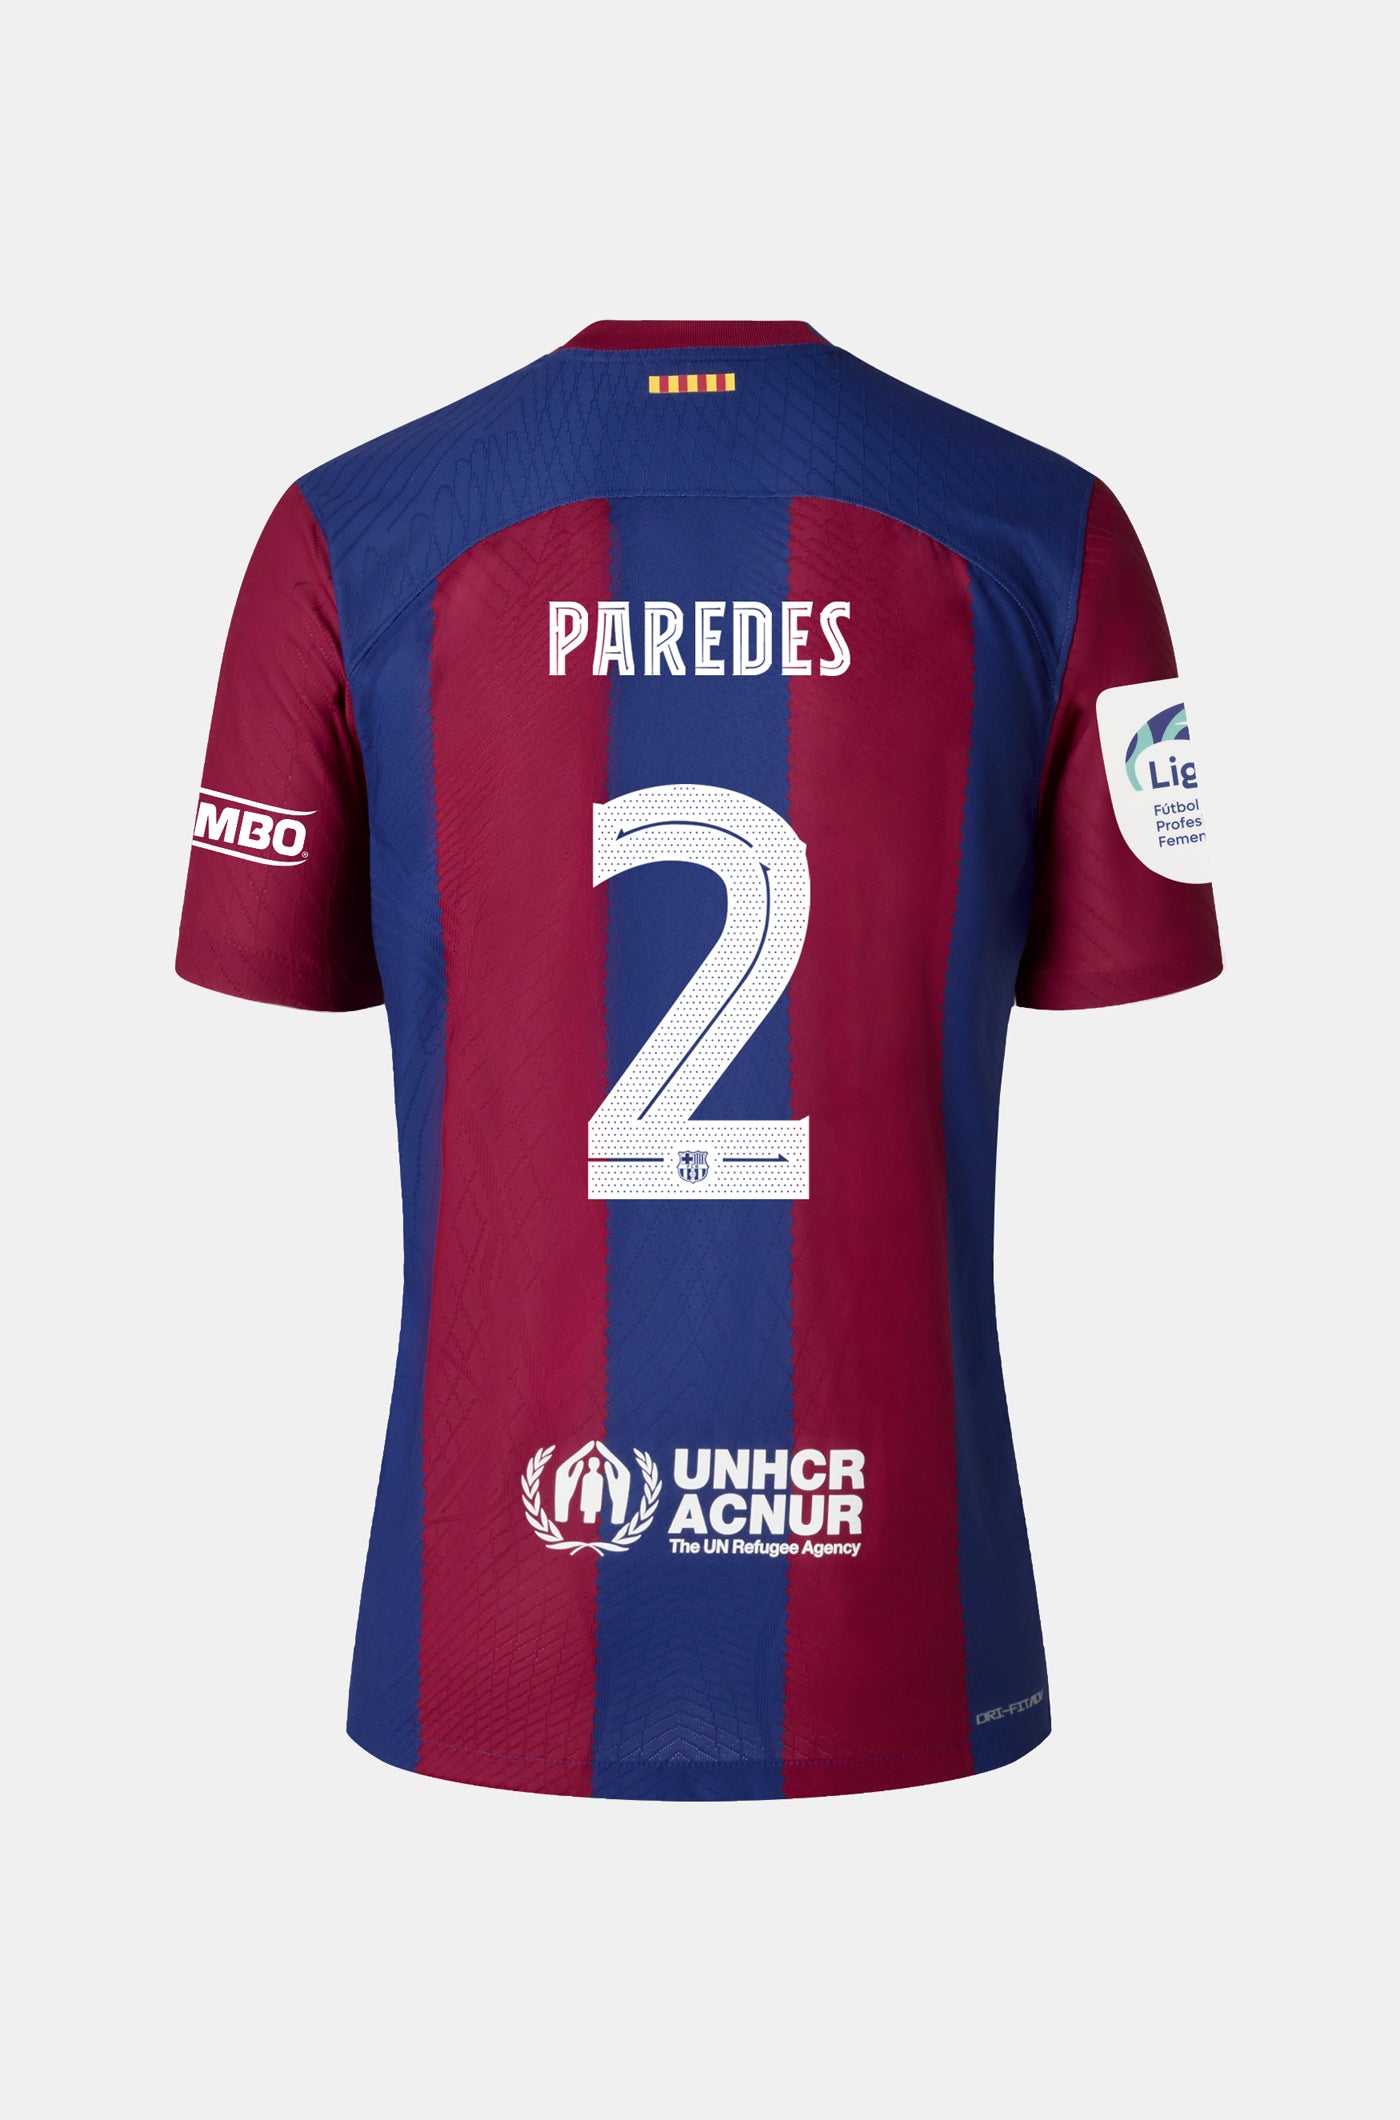 Liga F FC Barcelona Home Shirt 23/24 Player's Edition - Women - PAREDES